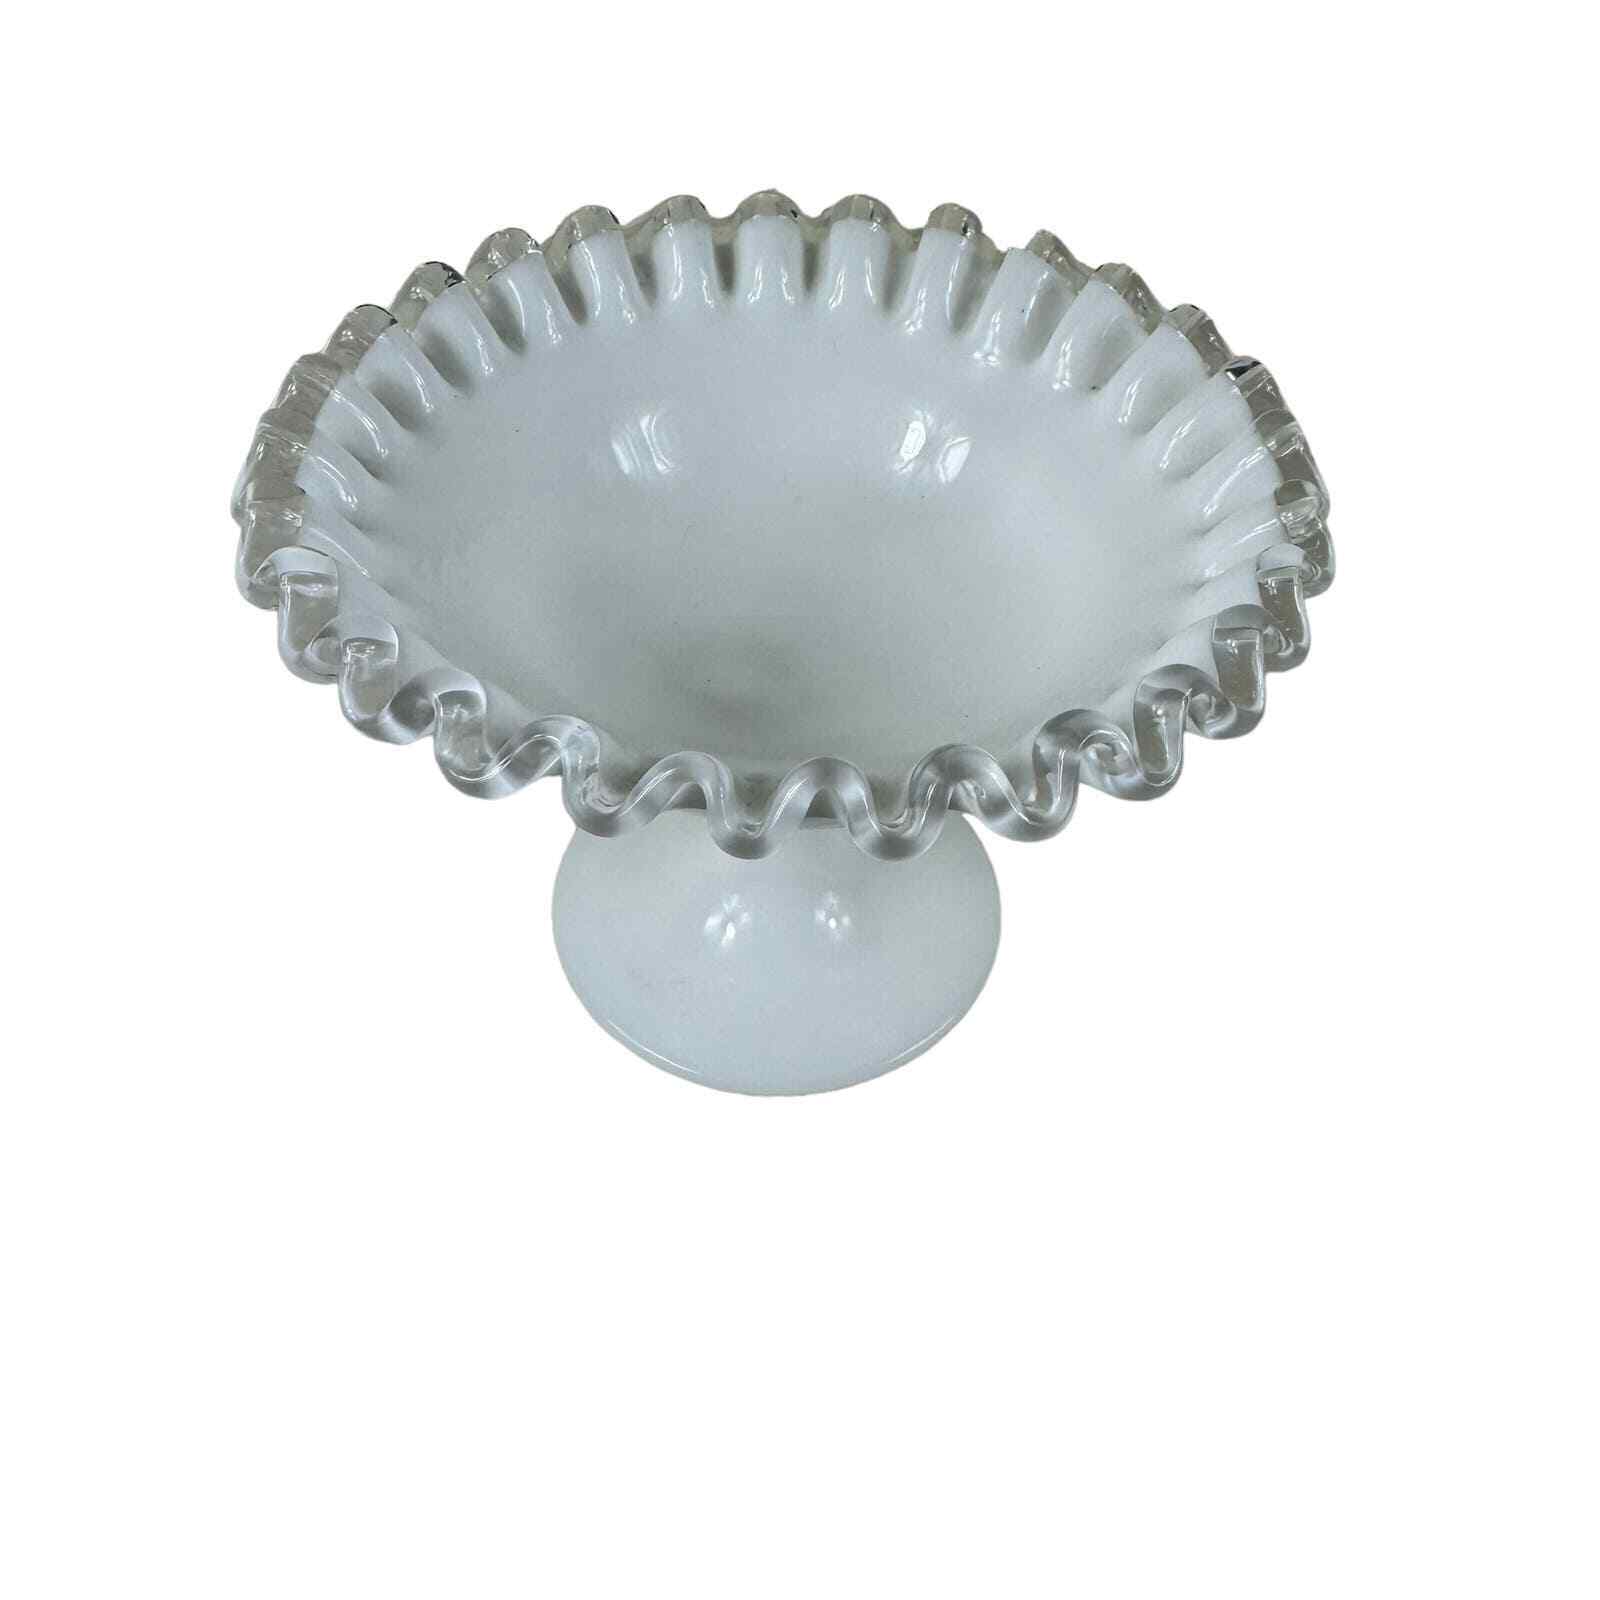 Vintage Fenton Silver Crest White Milk Glass Ruffled Edge Pedestal Candy Dish